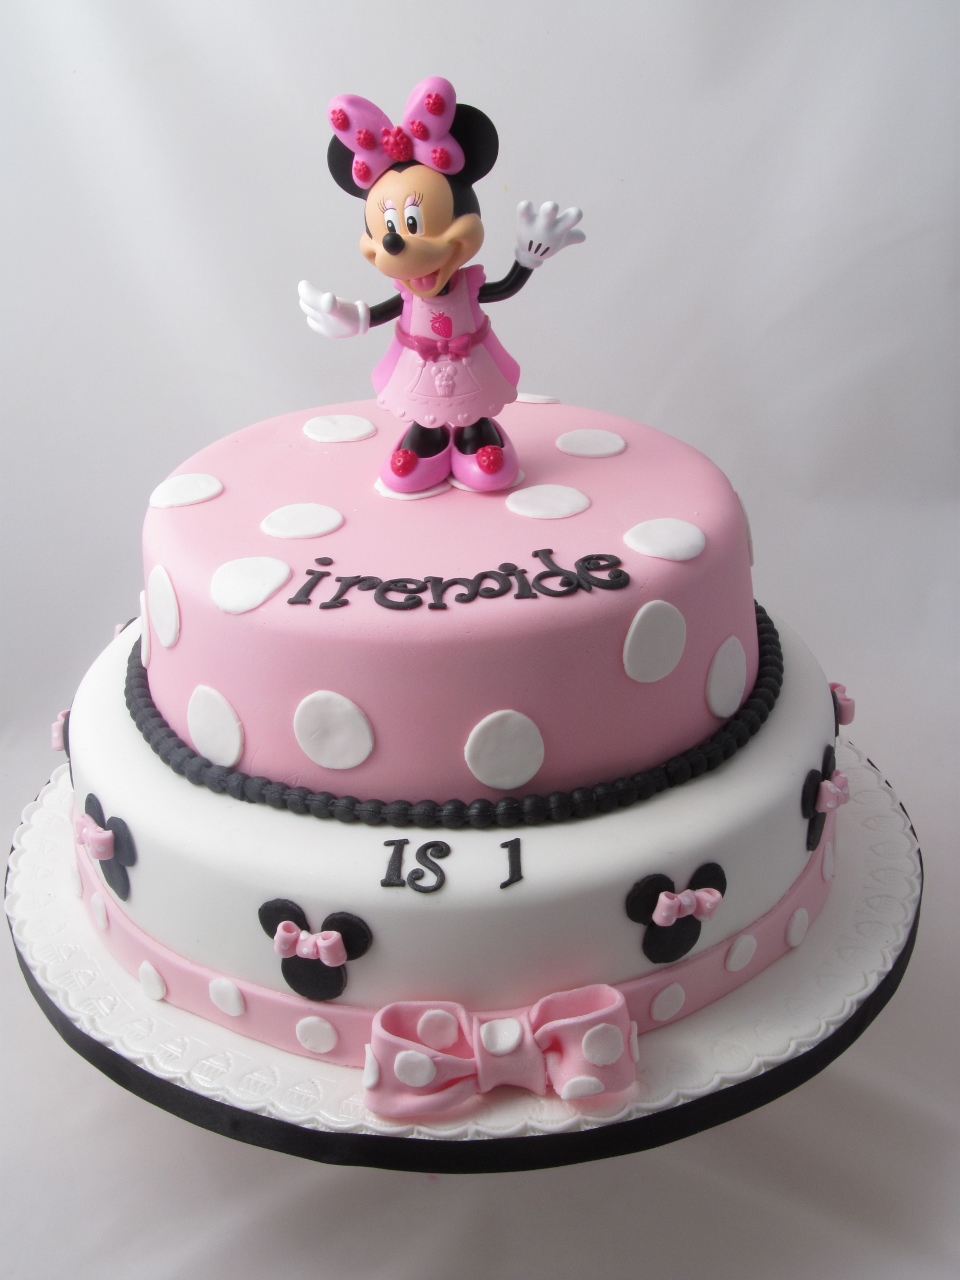 minnie-mouse-cakes-decoration-ideas-little-birthday-cakes